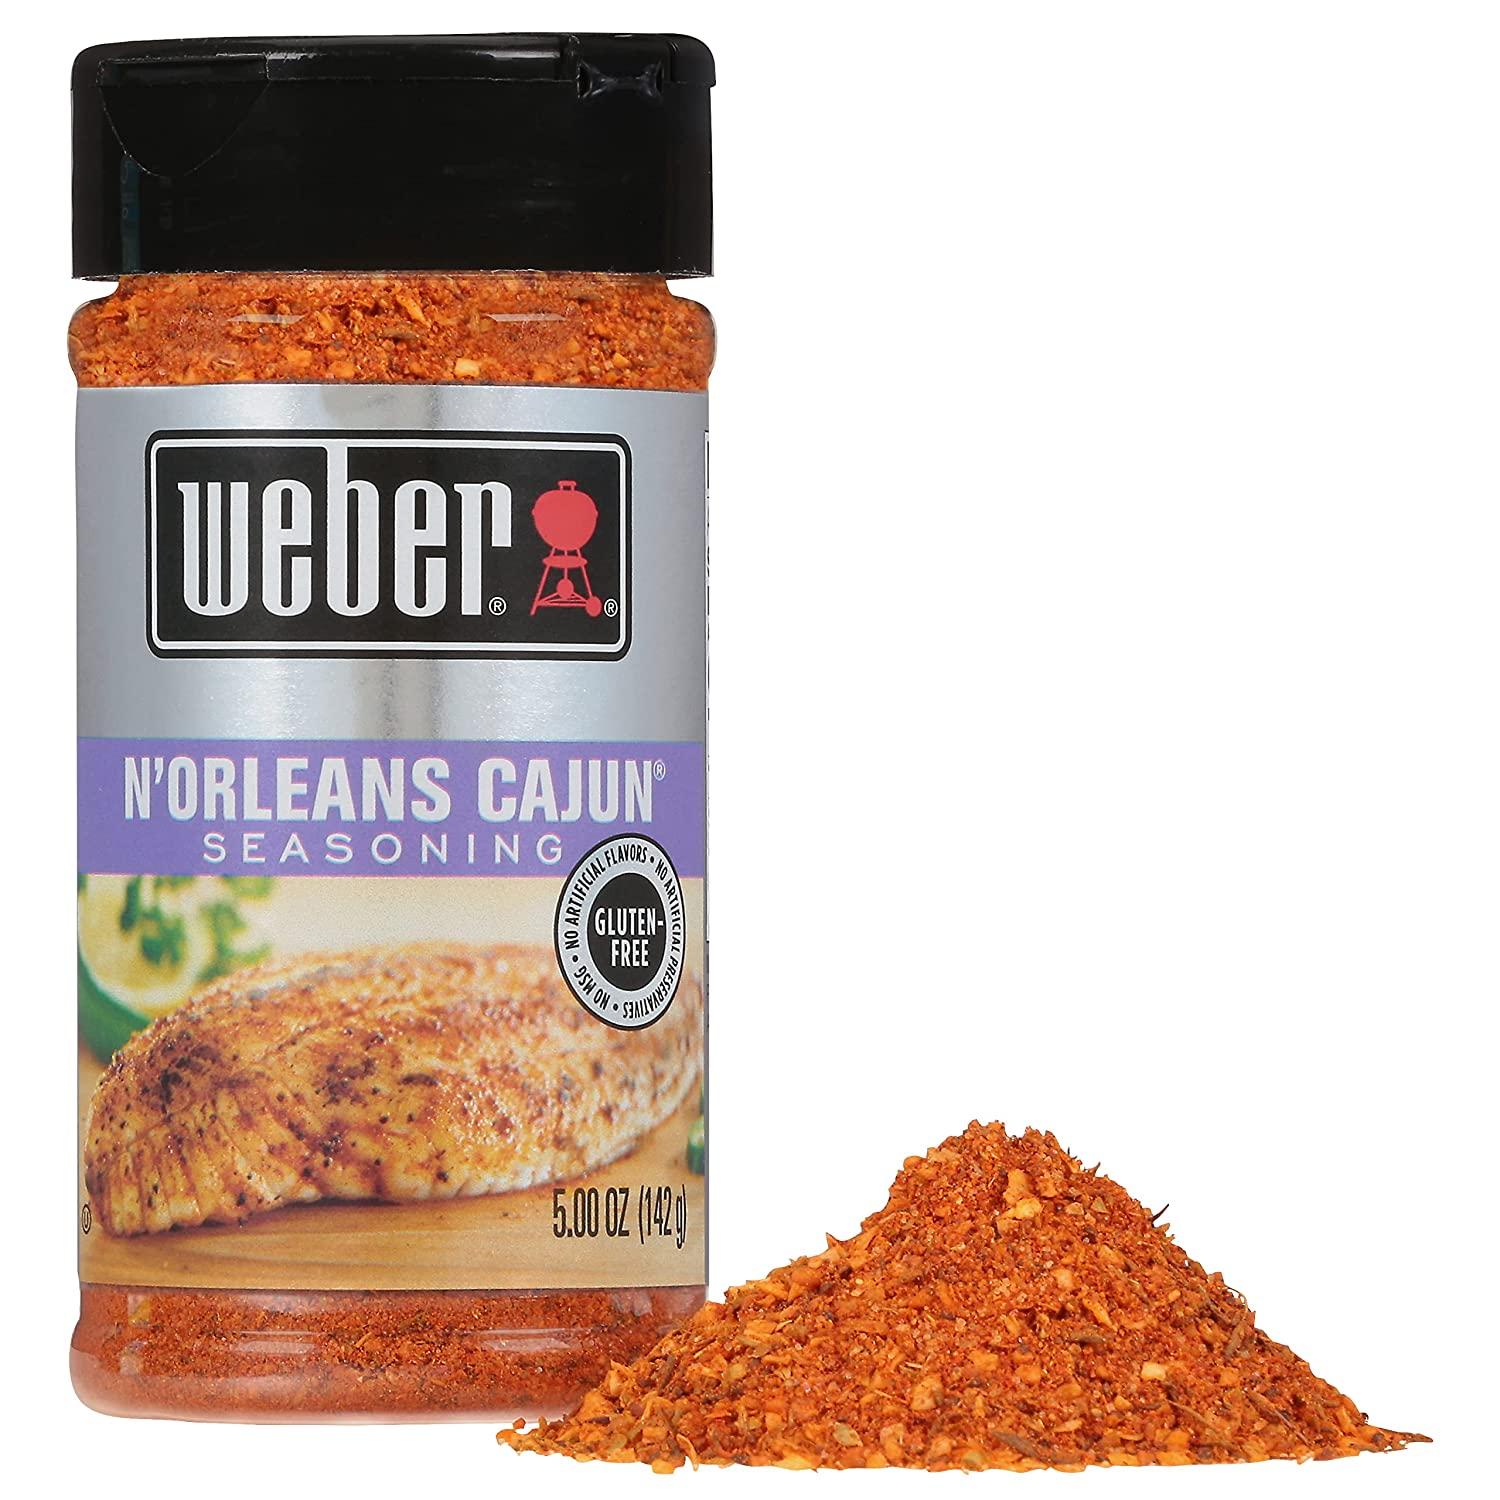 Weber Kickin Chicken Seasoning - 5 oz bottle